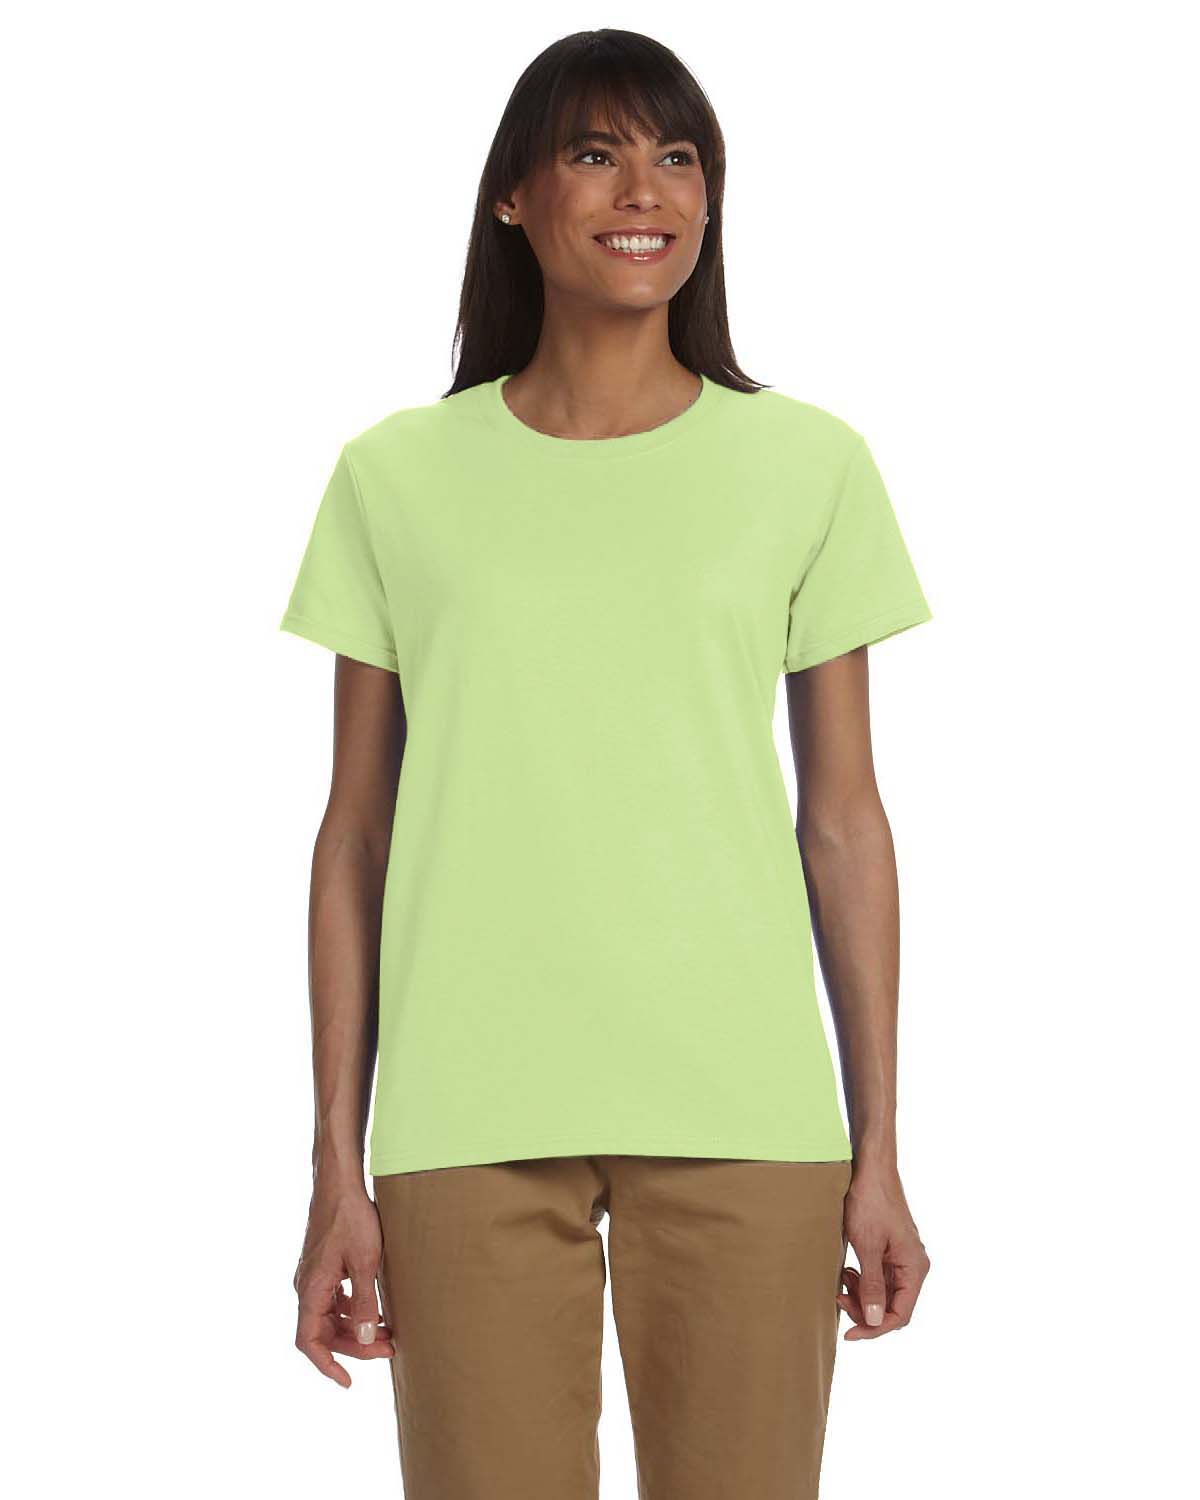 https://images.shirtspace.com/fullsize/fqQvIszUpJxIptsokIXViw%3D%3D/144779/1232-gildan-g200l-ladies-ultra-cotton-100-cotton-t-shirt-front-mint-green.jpg